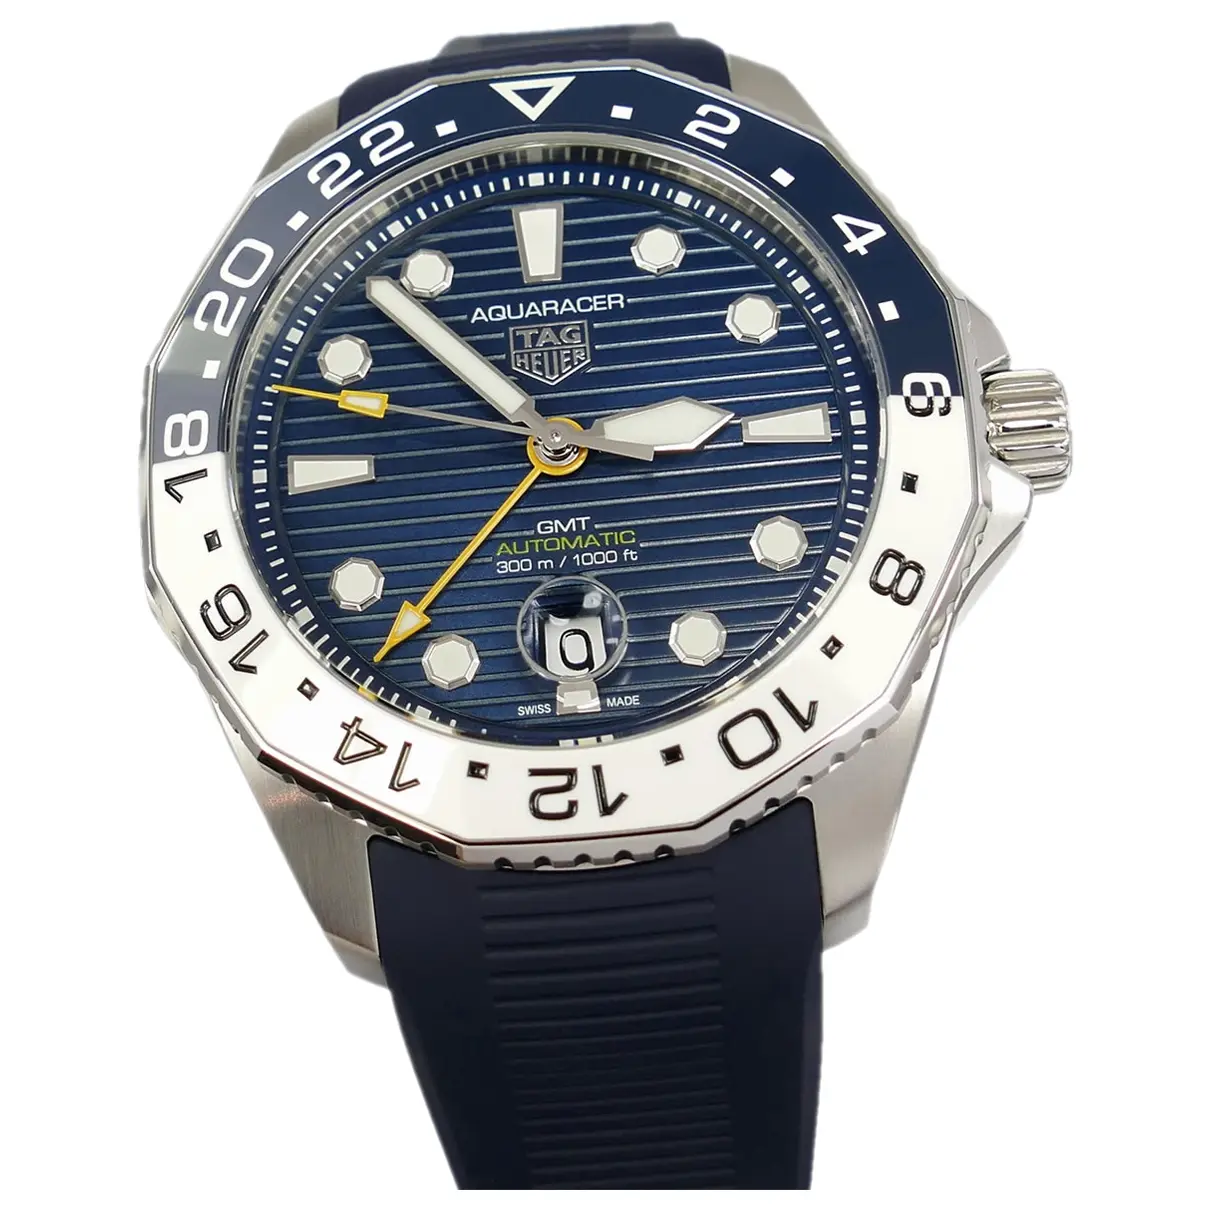 Aquaracer watch